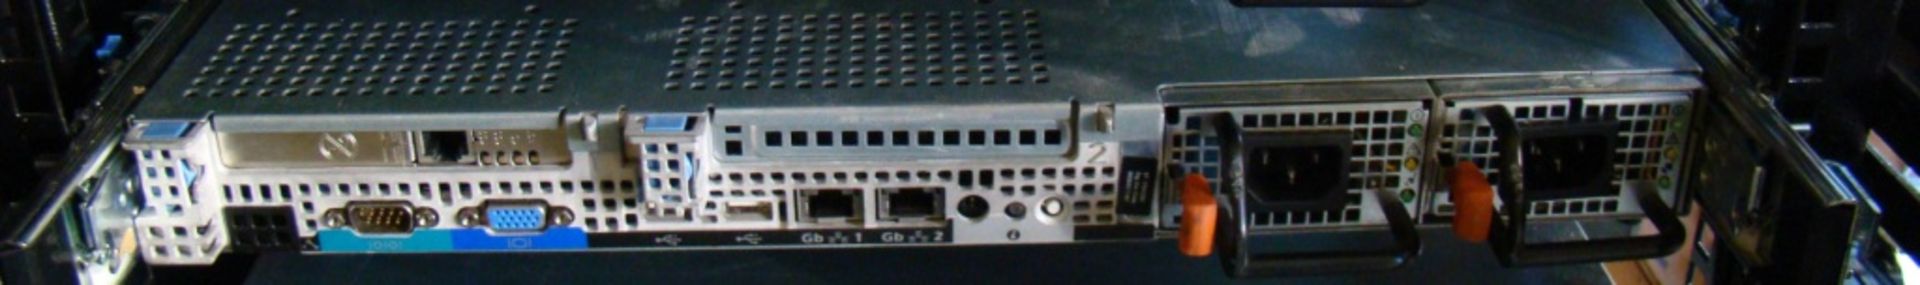 Dell PowerEdge 1950 1U Dell BIOS 2.7.0, Twin Quad 4 Cores Rack Server (2 x Intel Quad Core - Image 2 of 10